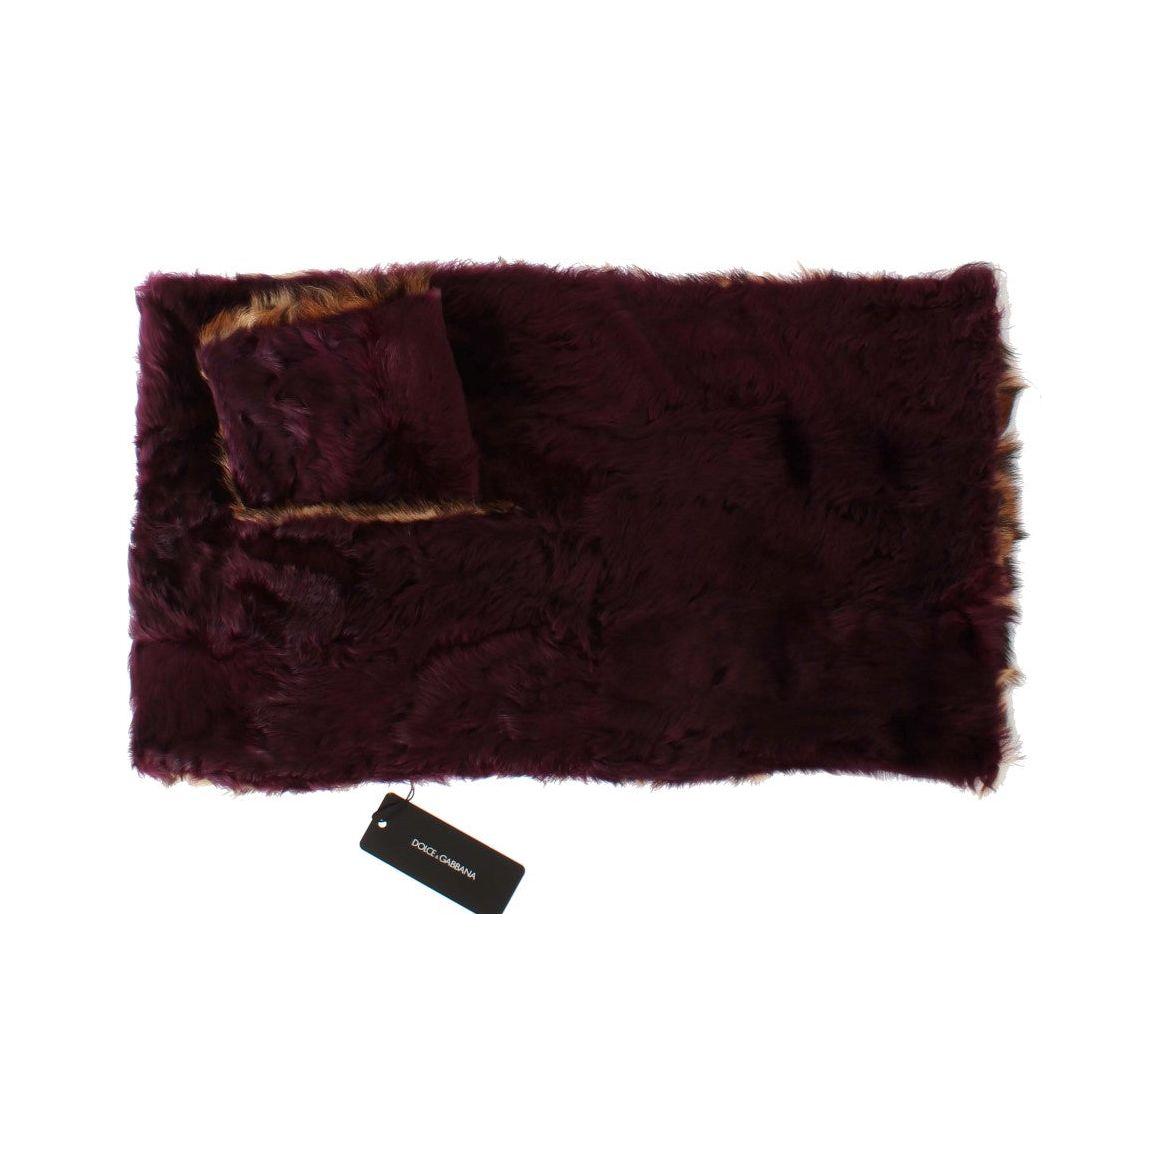 Dolce & Gabbana Exquisite Leopard Print Lambskin Fur Scarf purple-lamb-fur-leopard-print-scarf 303484-purple-lamb-fur-leopard-print-scarf-4.jpg